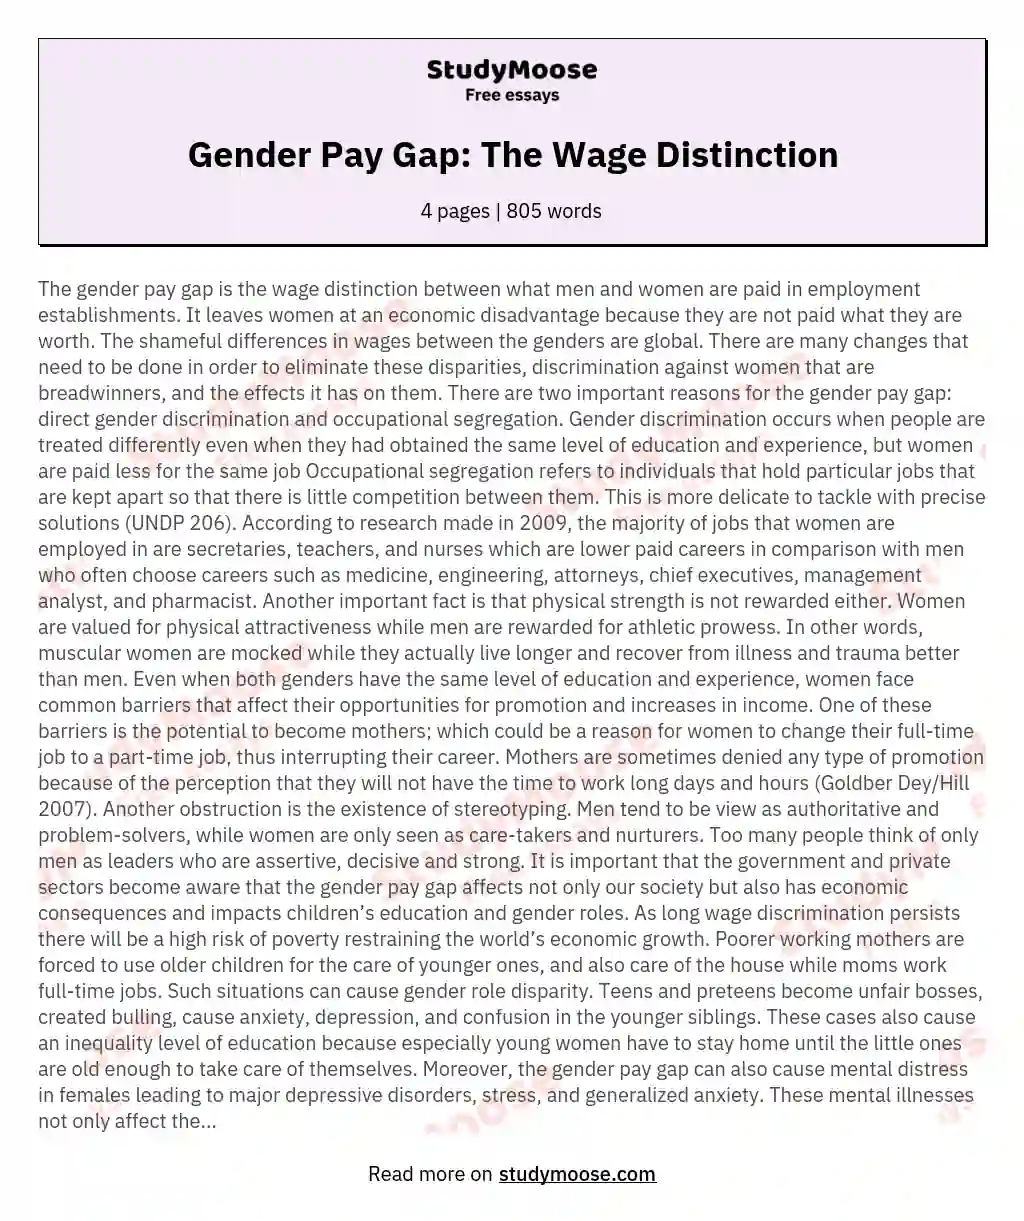 Gender Pay Gap: The Wage Distinction essay